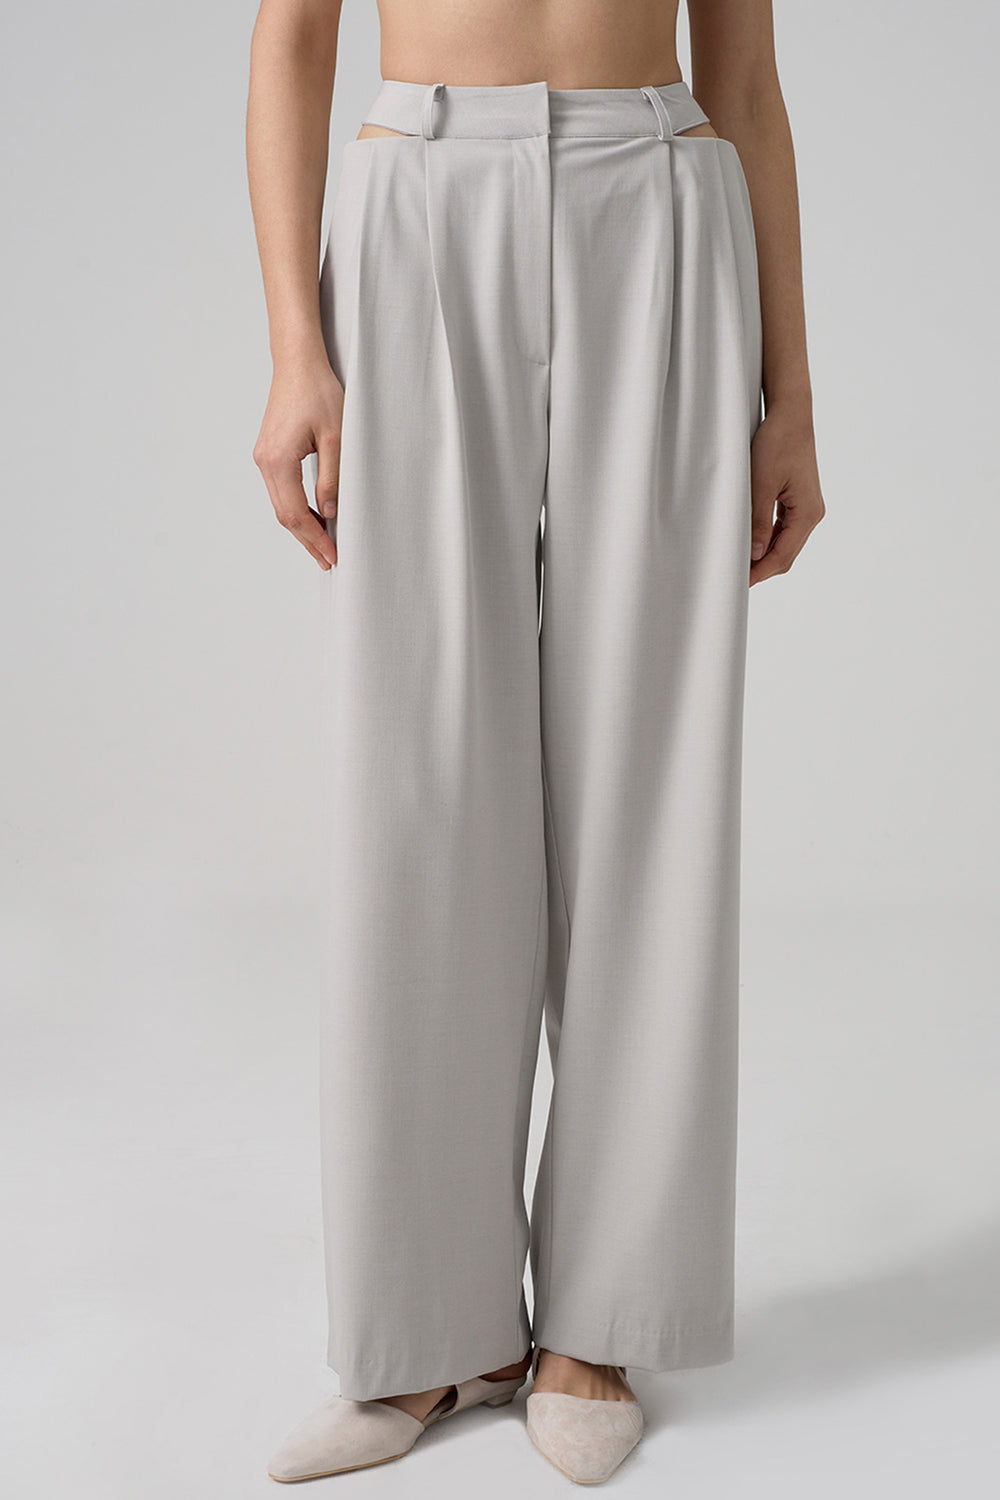 Vogue cutout Trousers, Gray